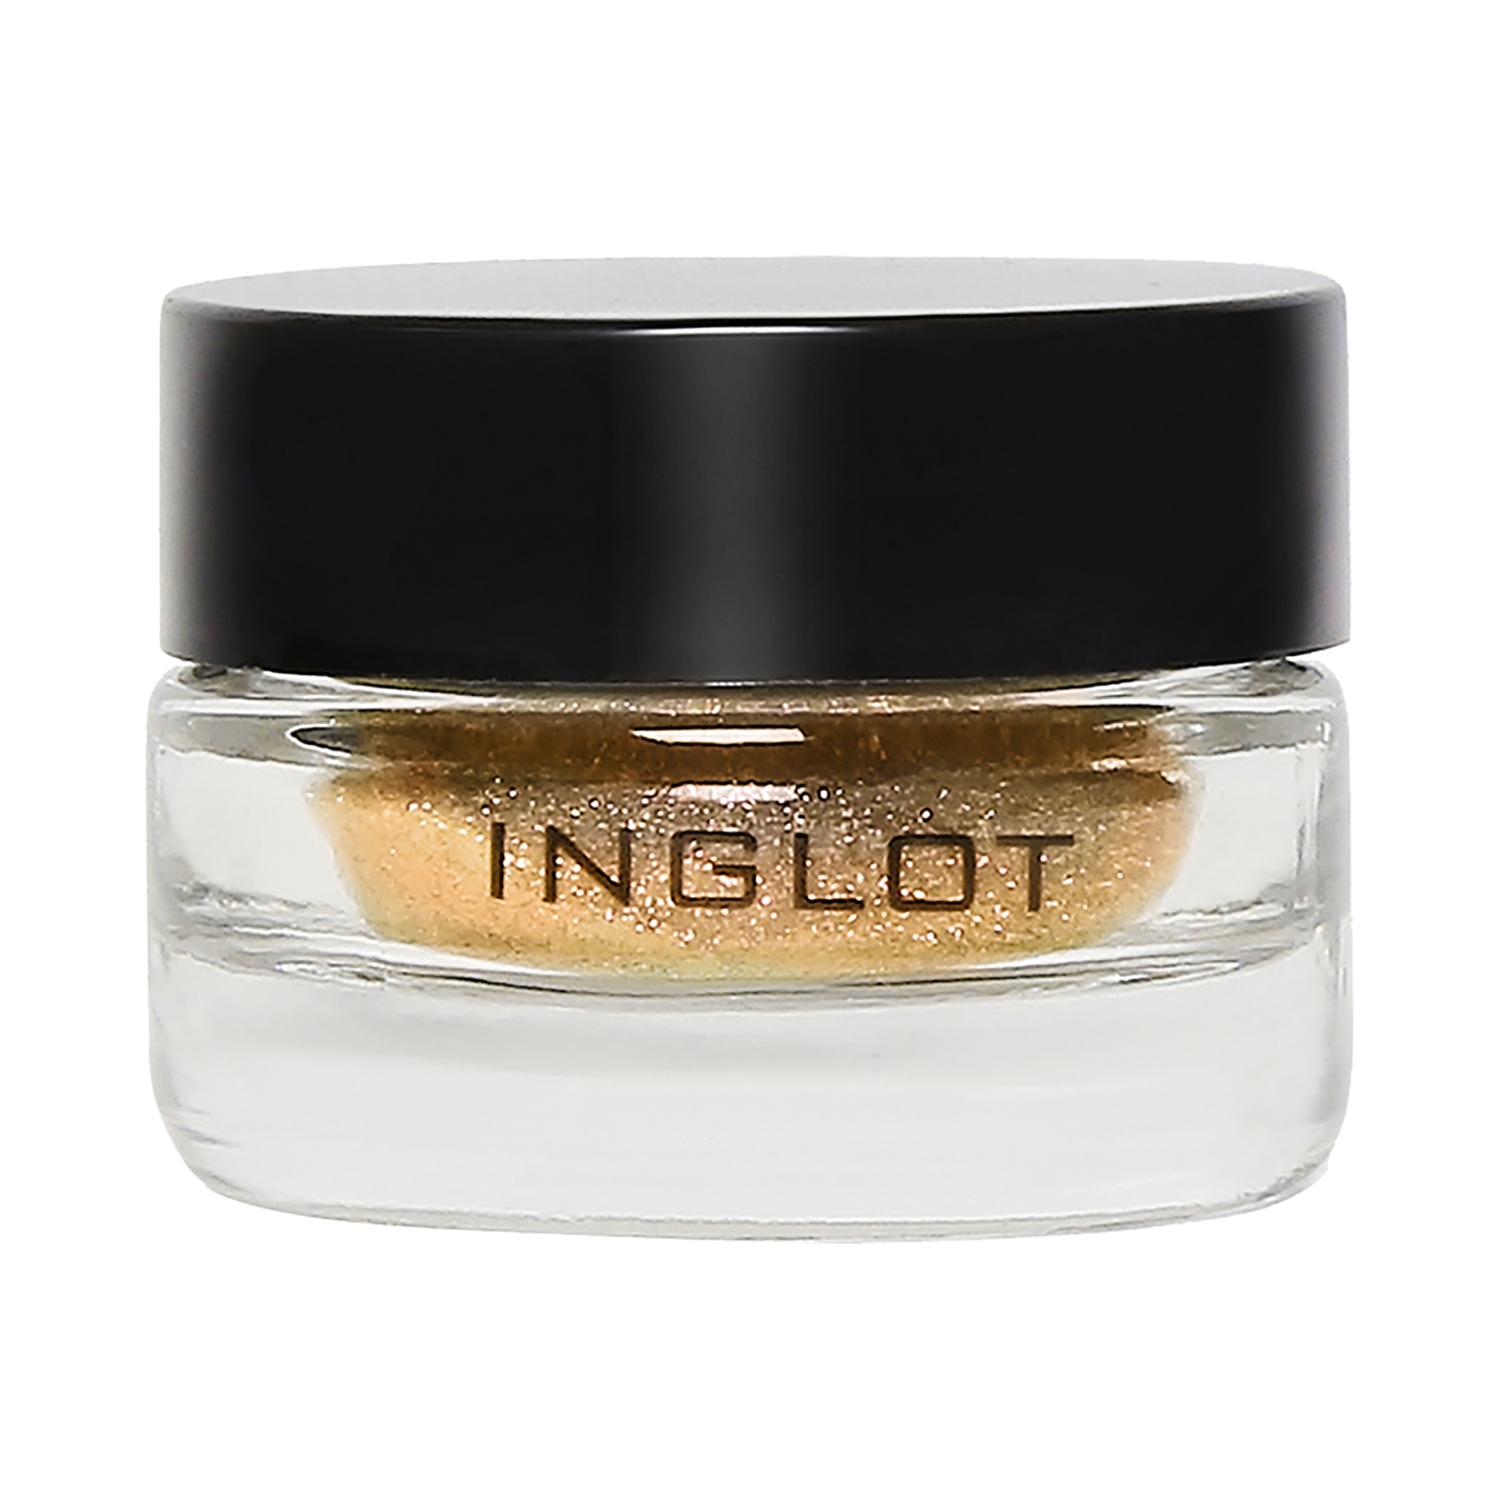 INGLOT | INGLOT Body Sparkles 62 (1g)